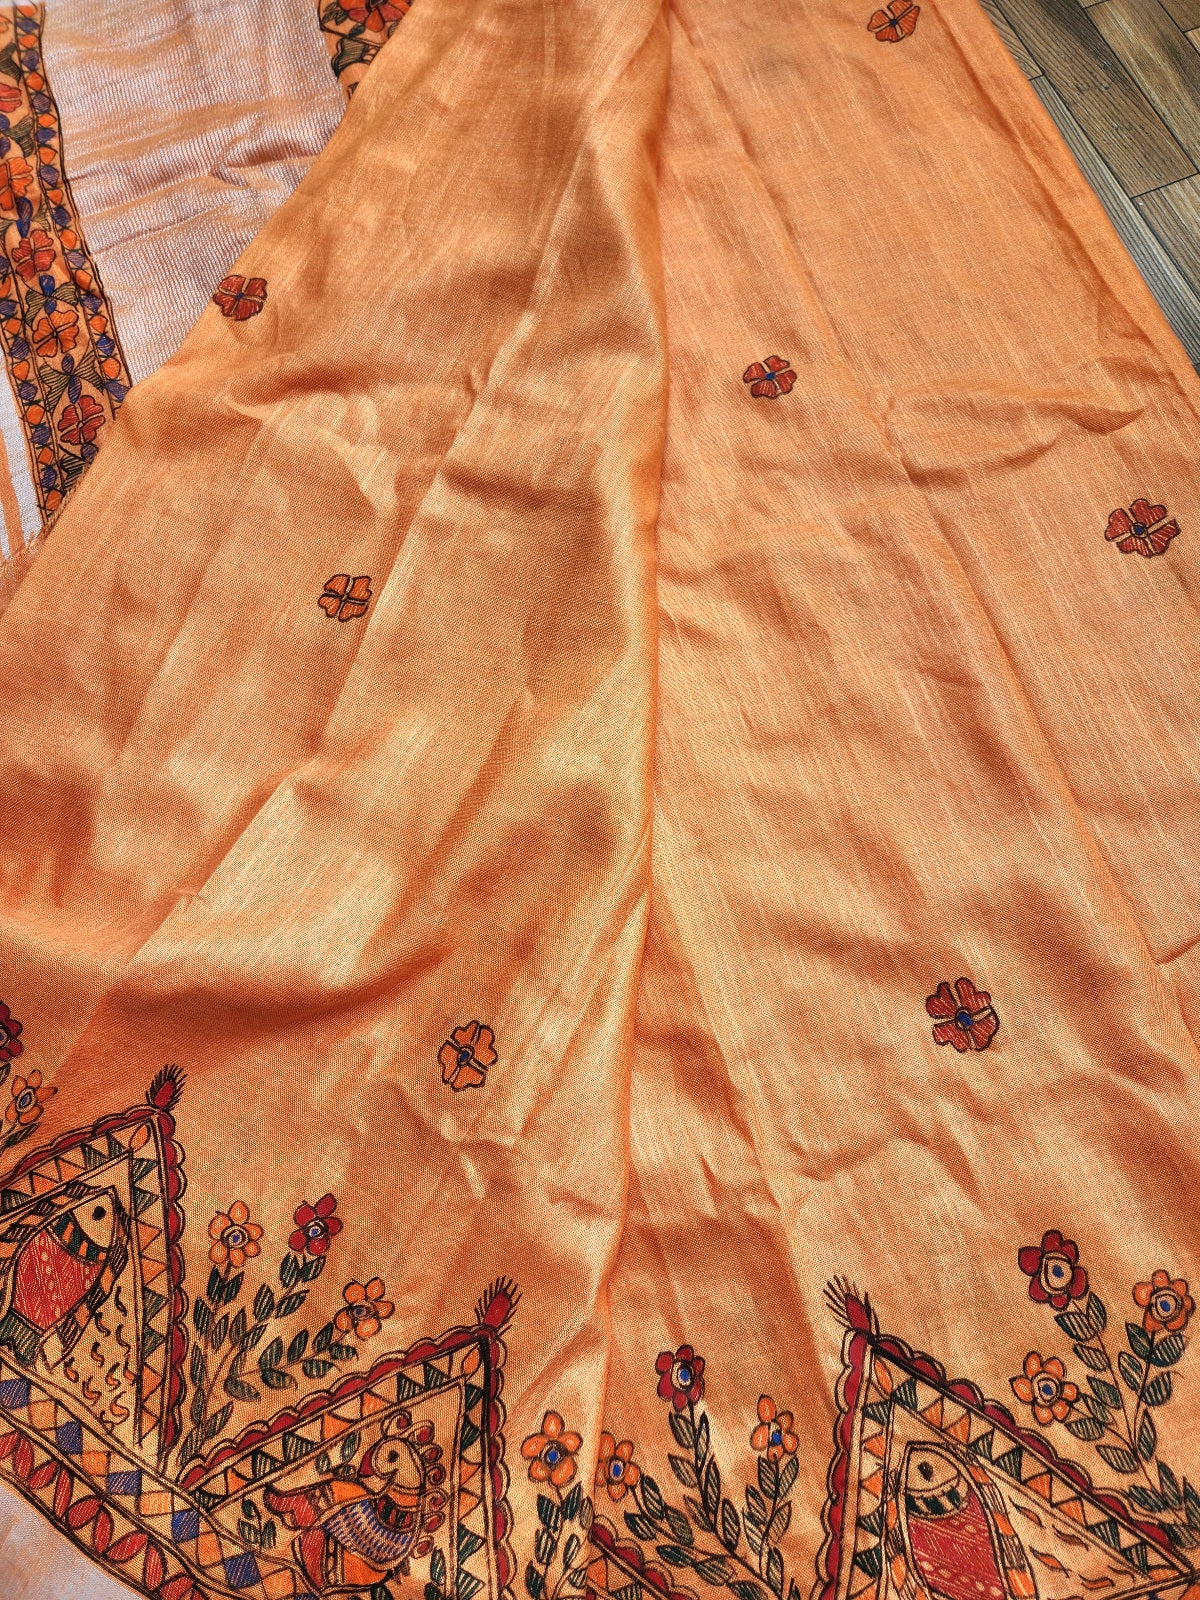 haldishopping wedding orange saree madhubani saree linen Indian sarees gifts